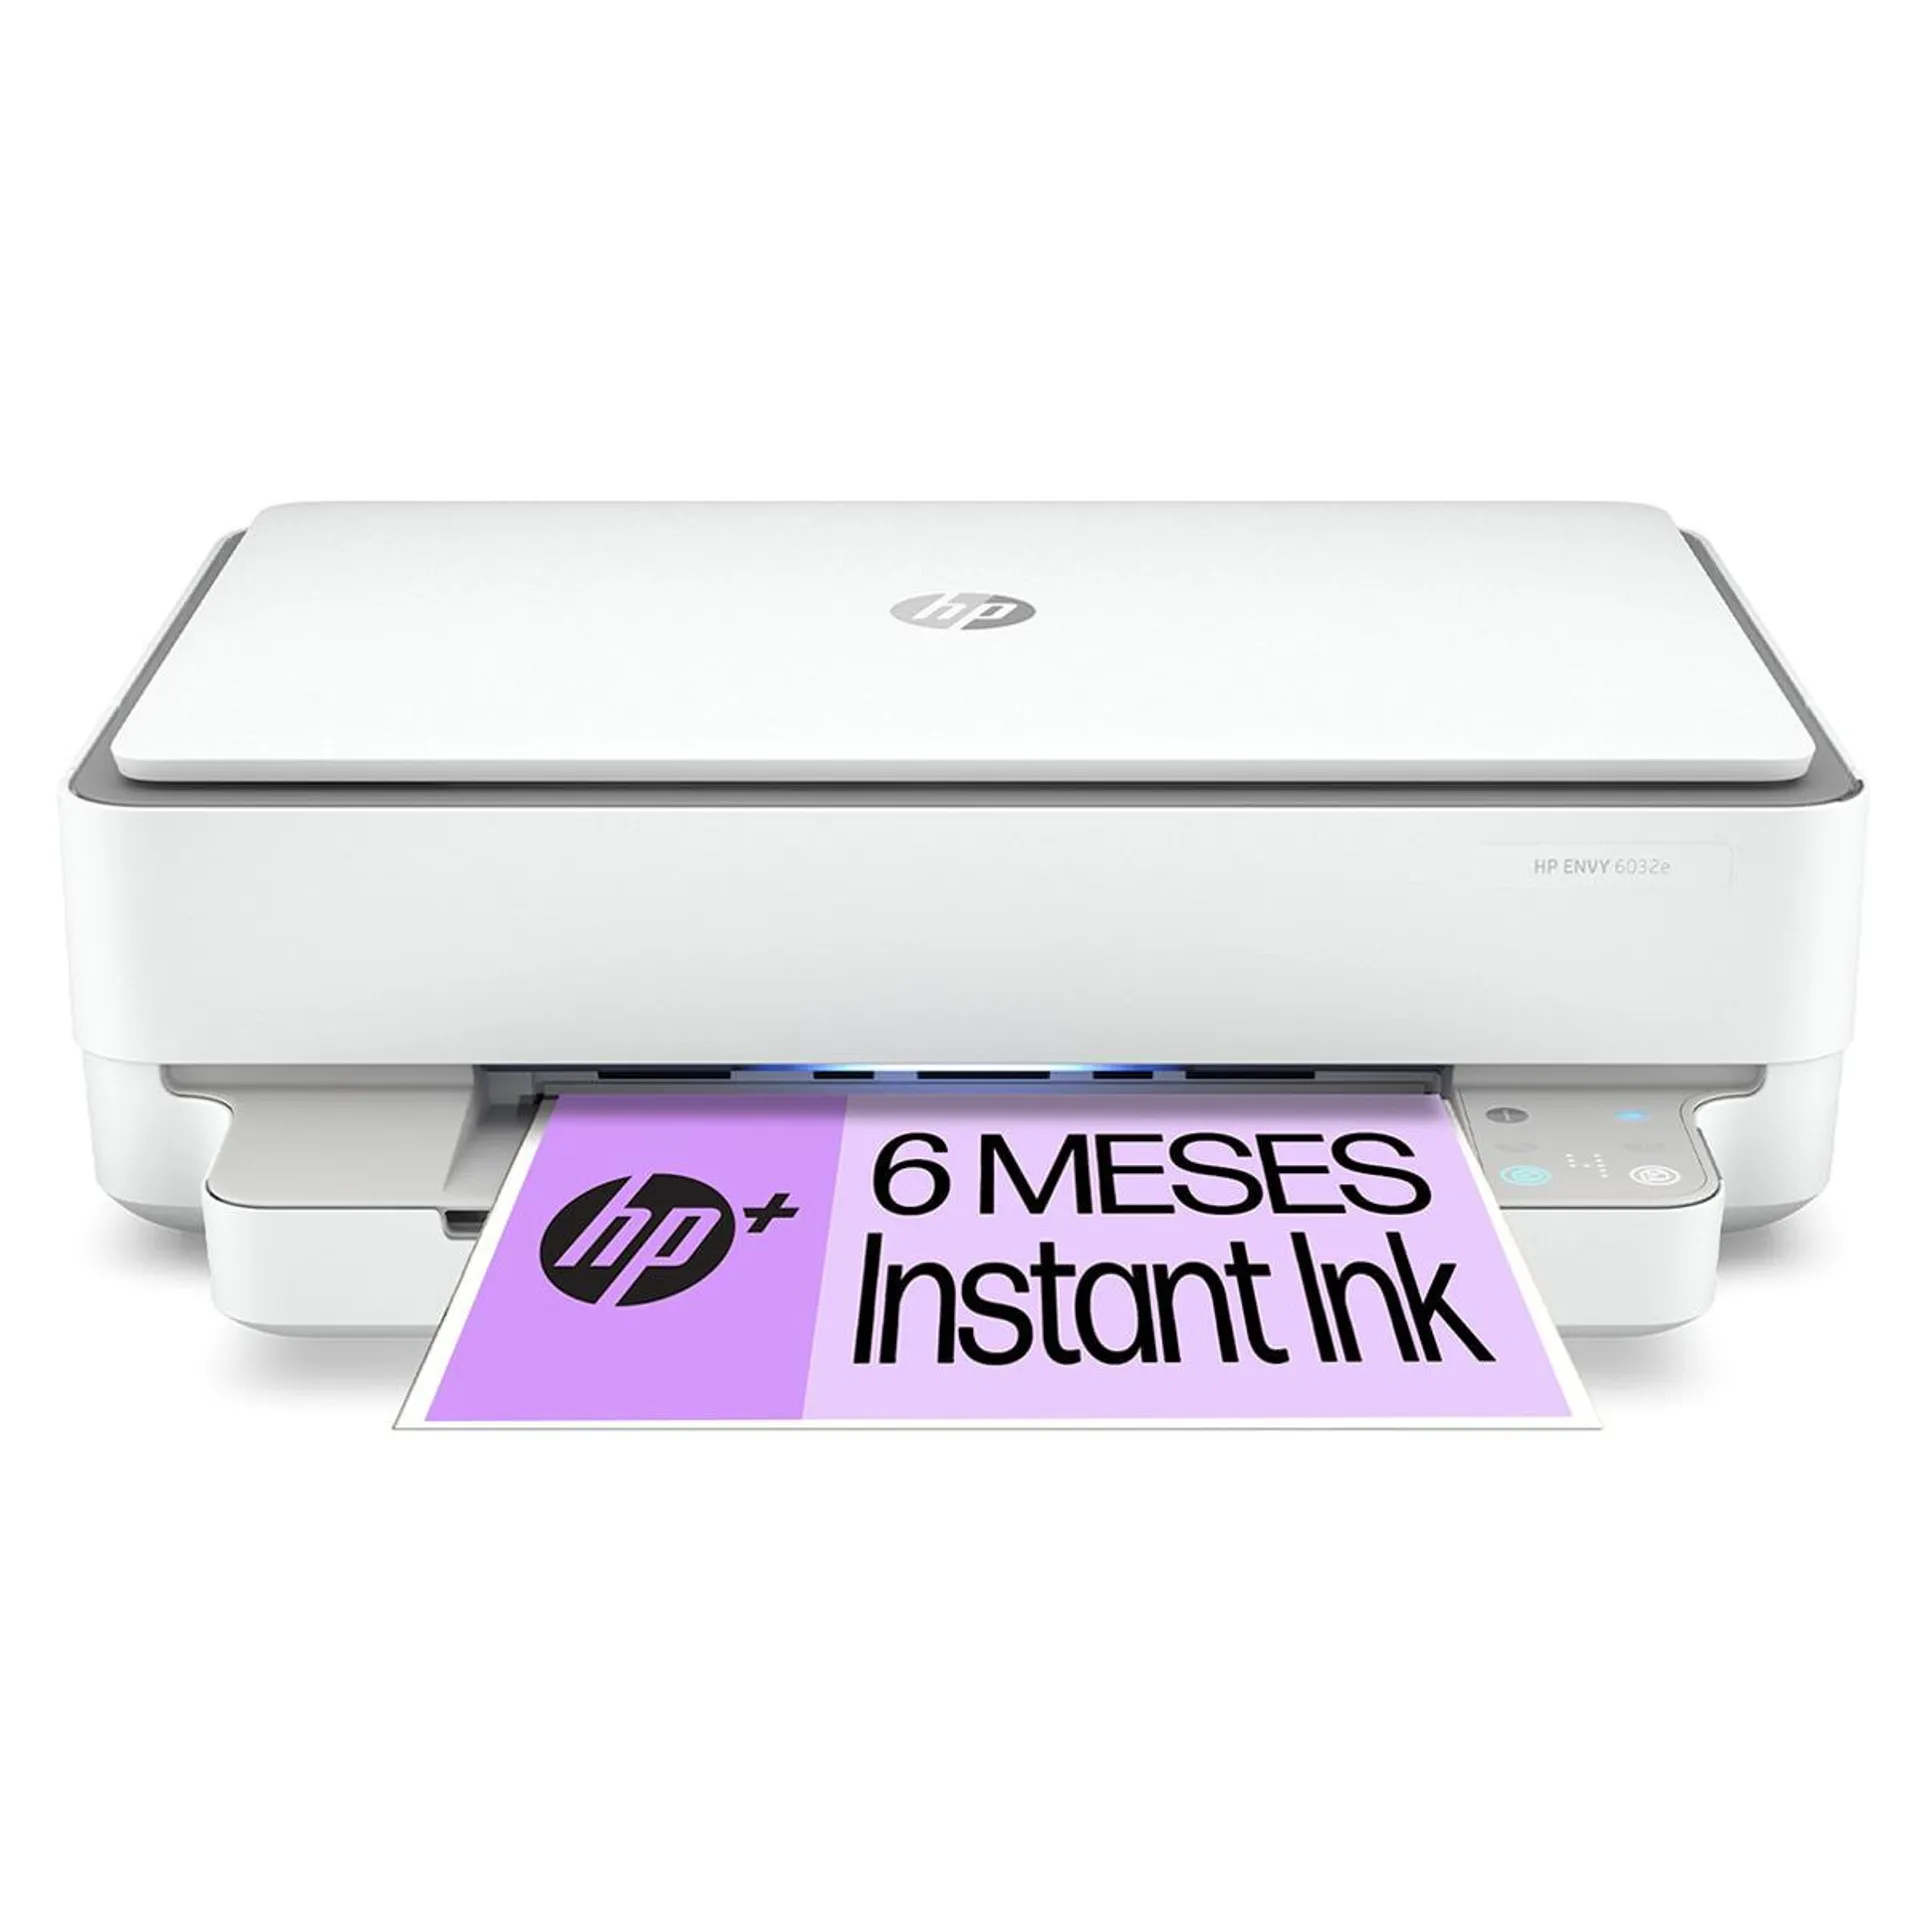 Impresora Multifunción HP Envy 6032e, WiFi, USB, color, 6 meses de impresión Instant Ink con HP+, doble cara